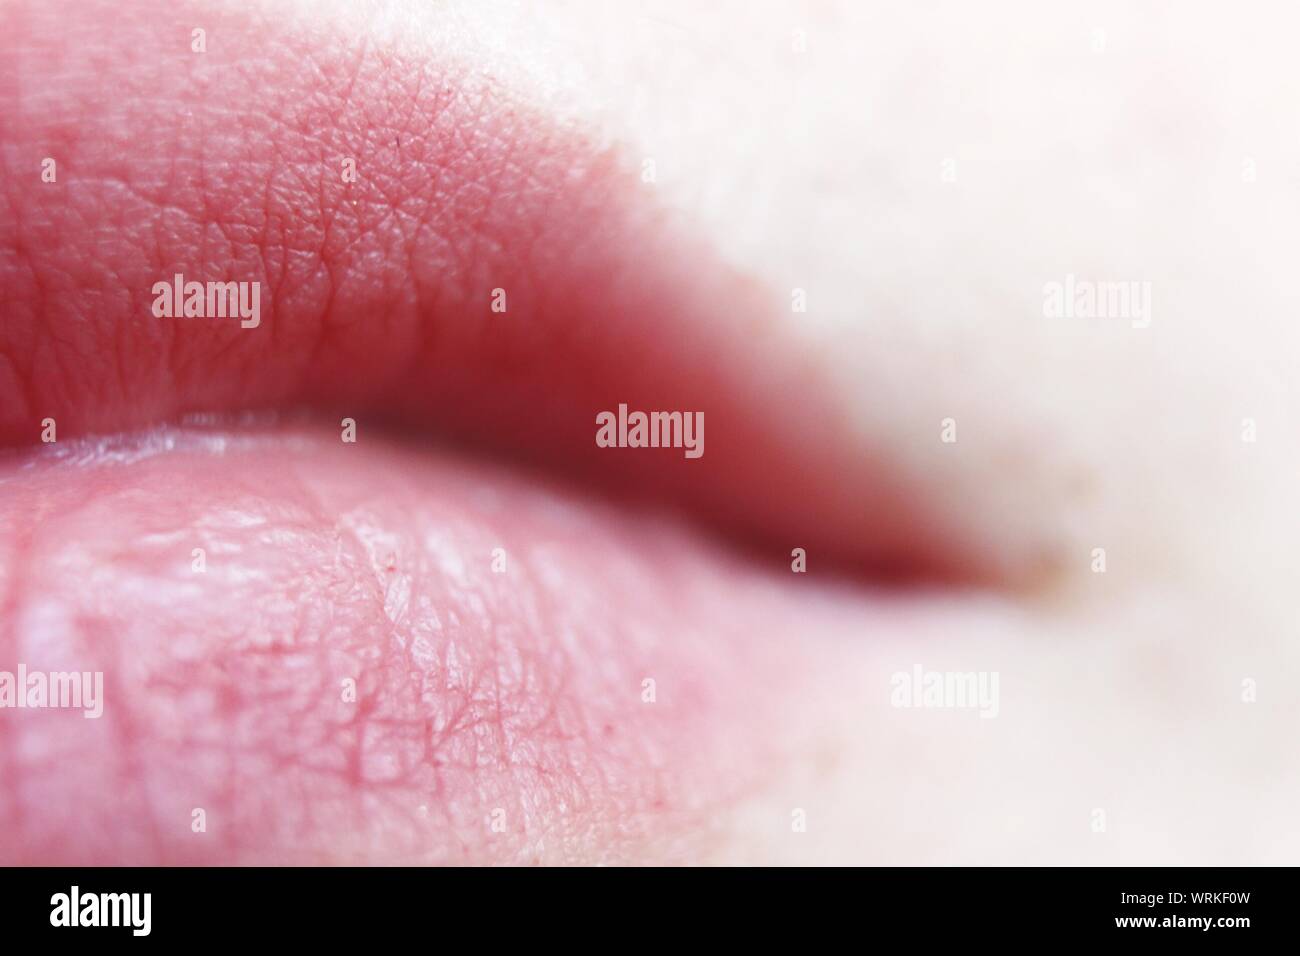 Close-up Of Human Lips Stock Photo